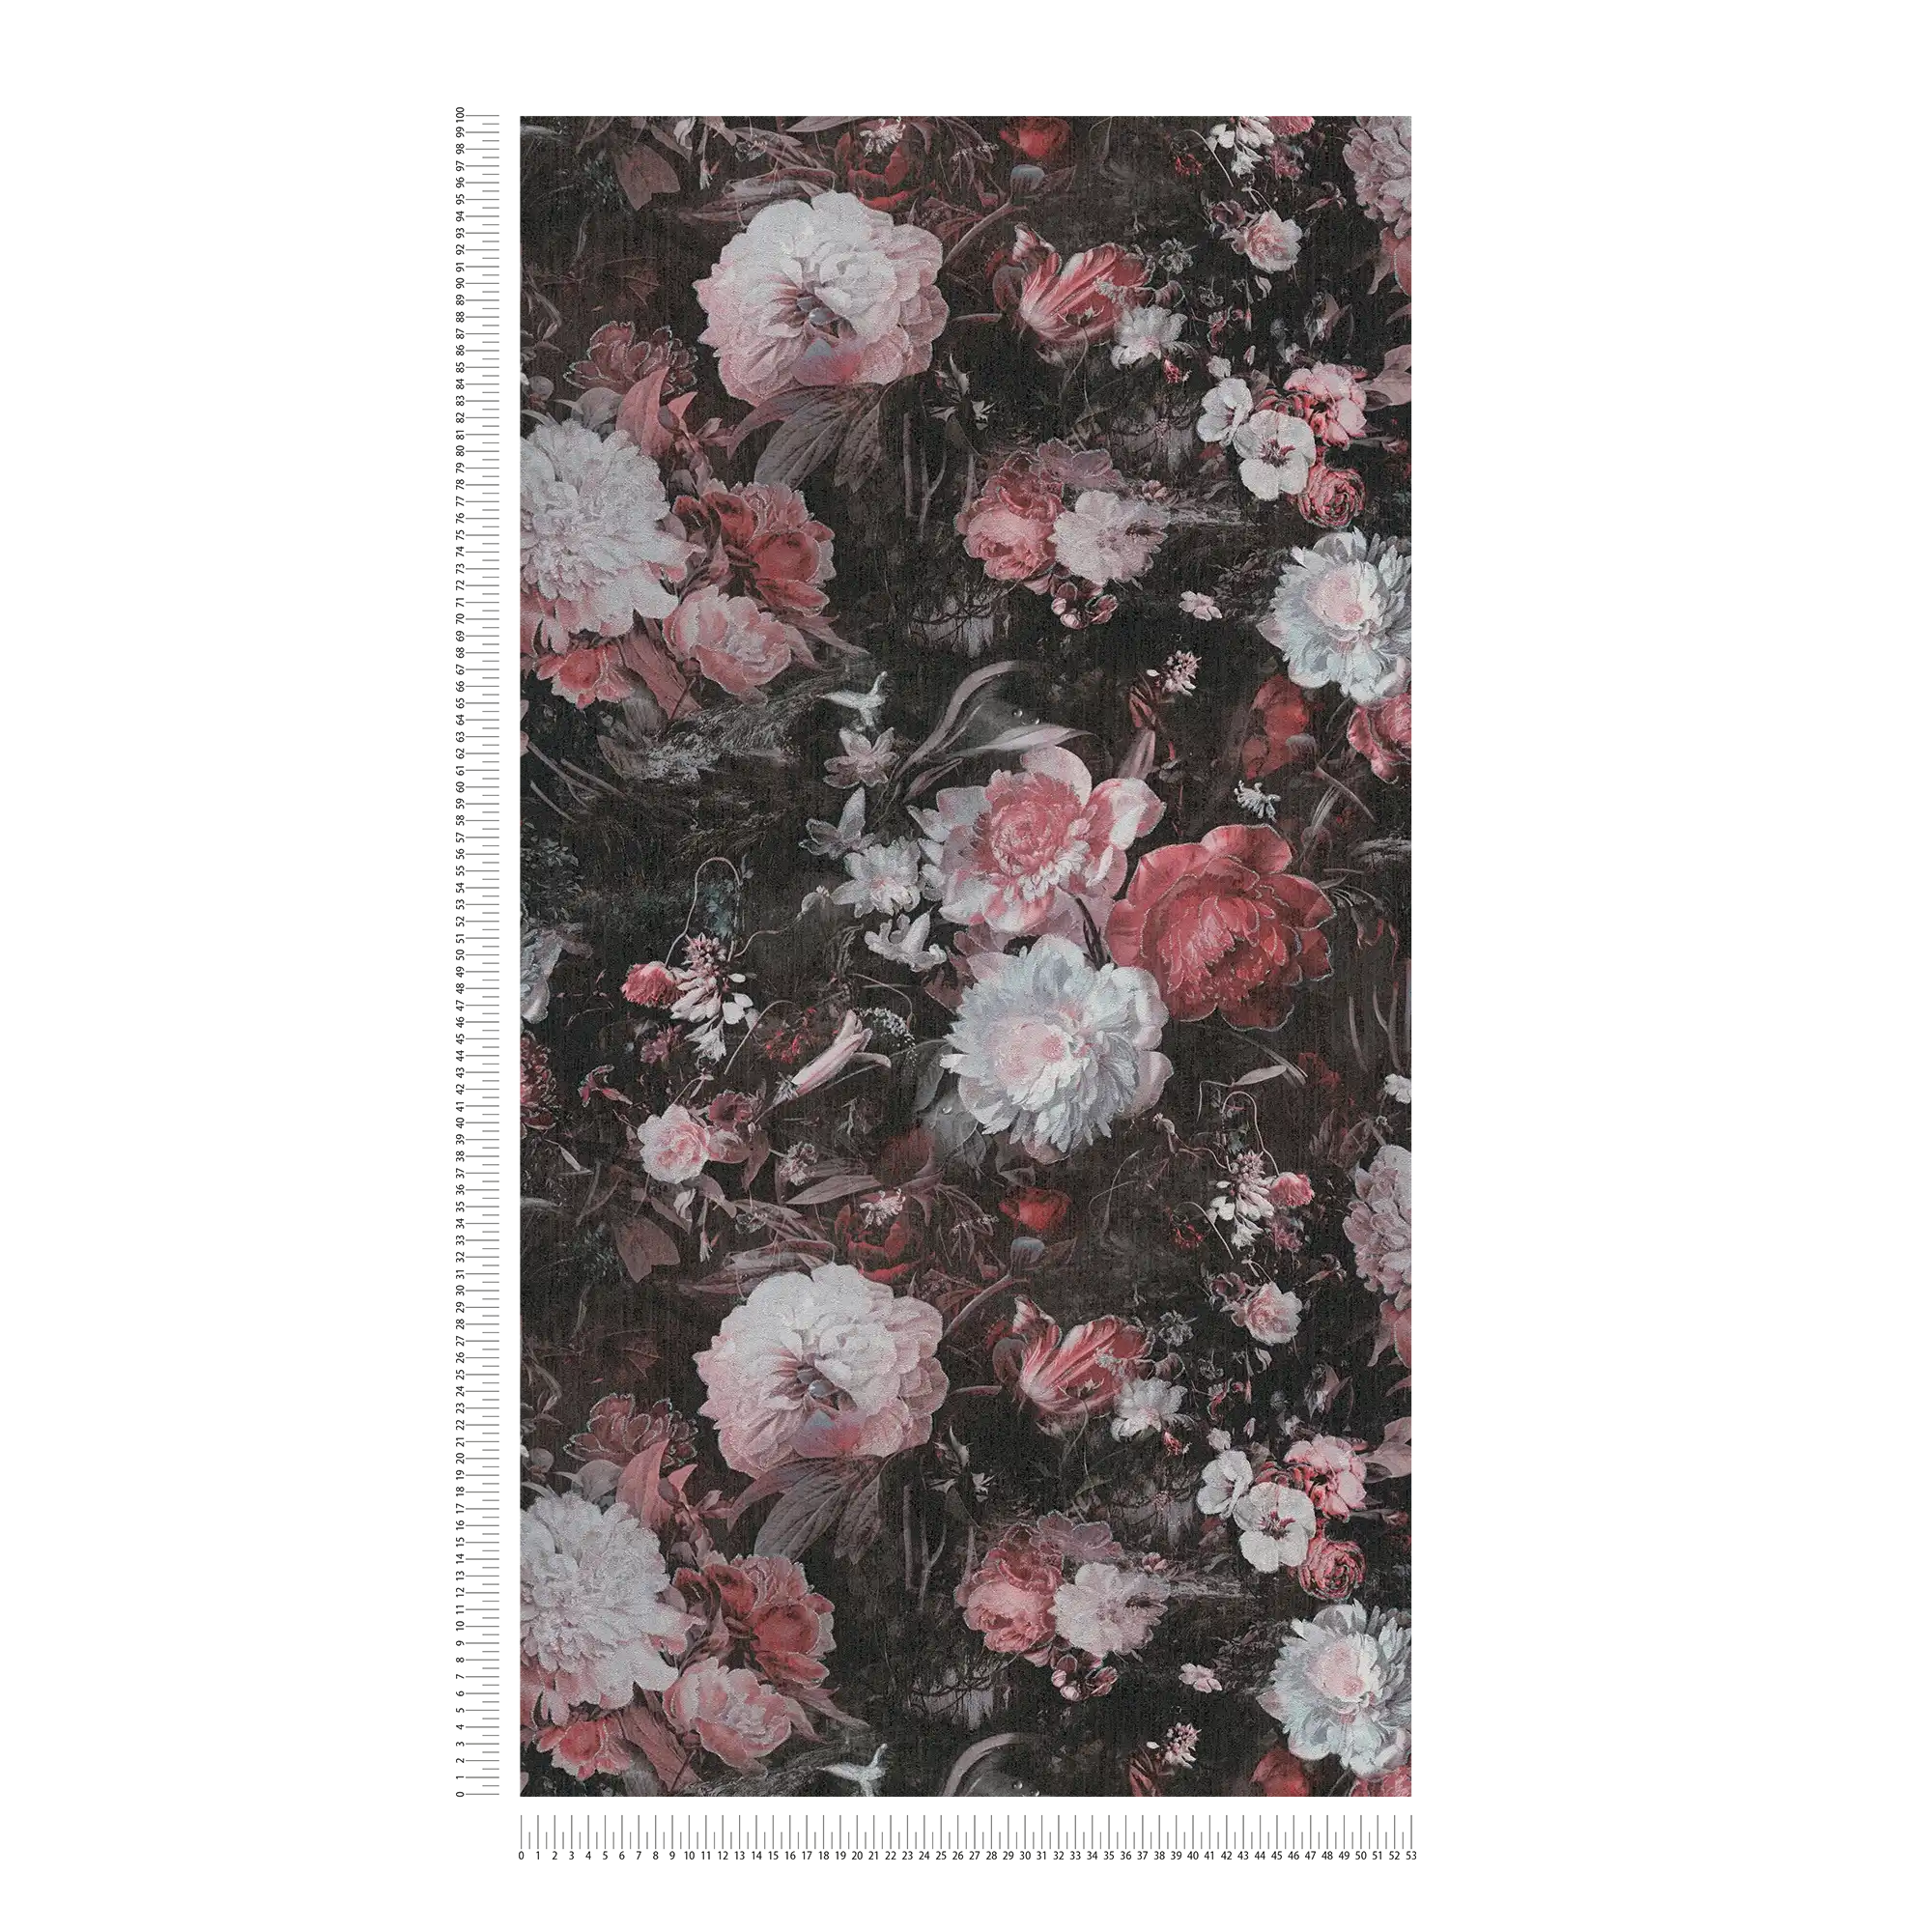             Carta da parati con rose in stile vintage - metallizzata, nera, bianca
        